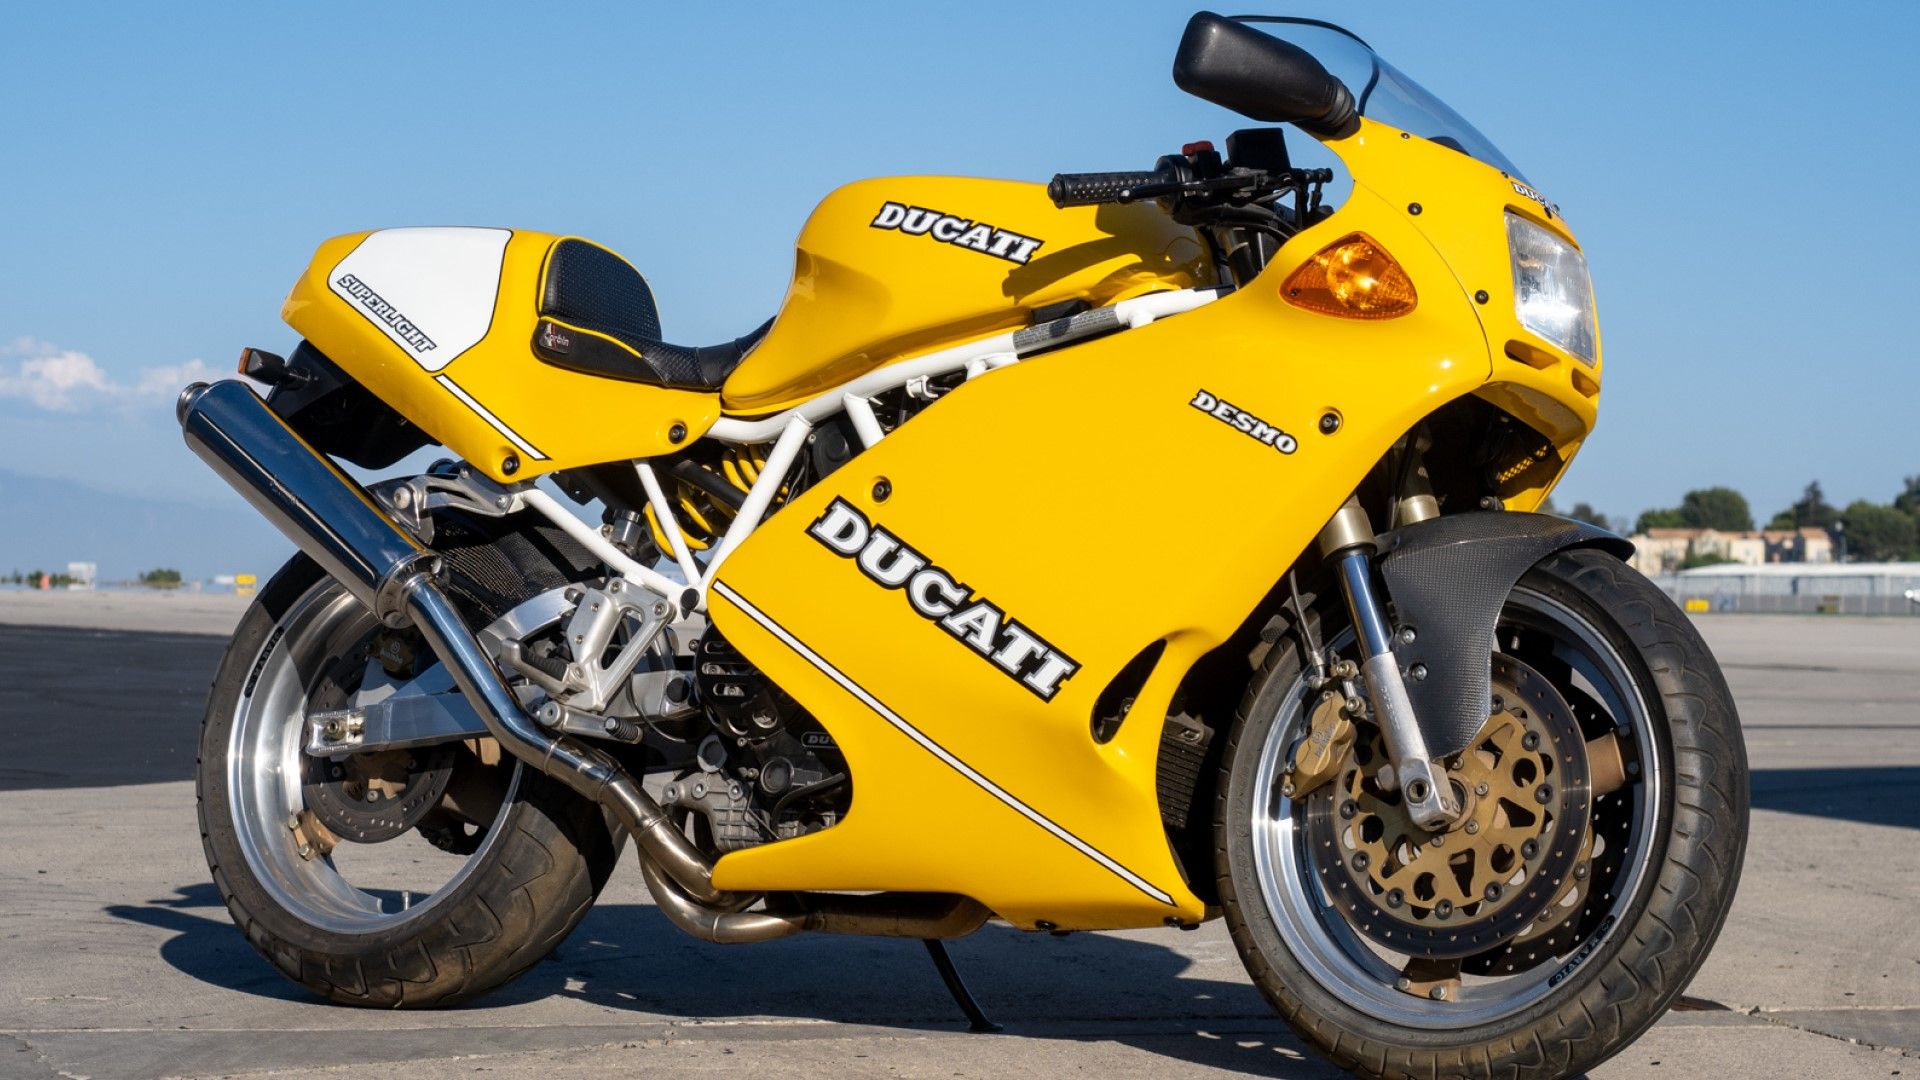 Ducati 900 Superlight in yellow side profile view